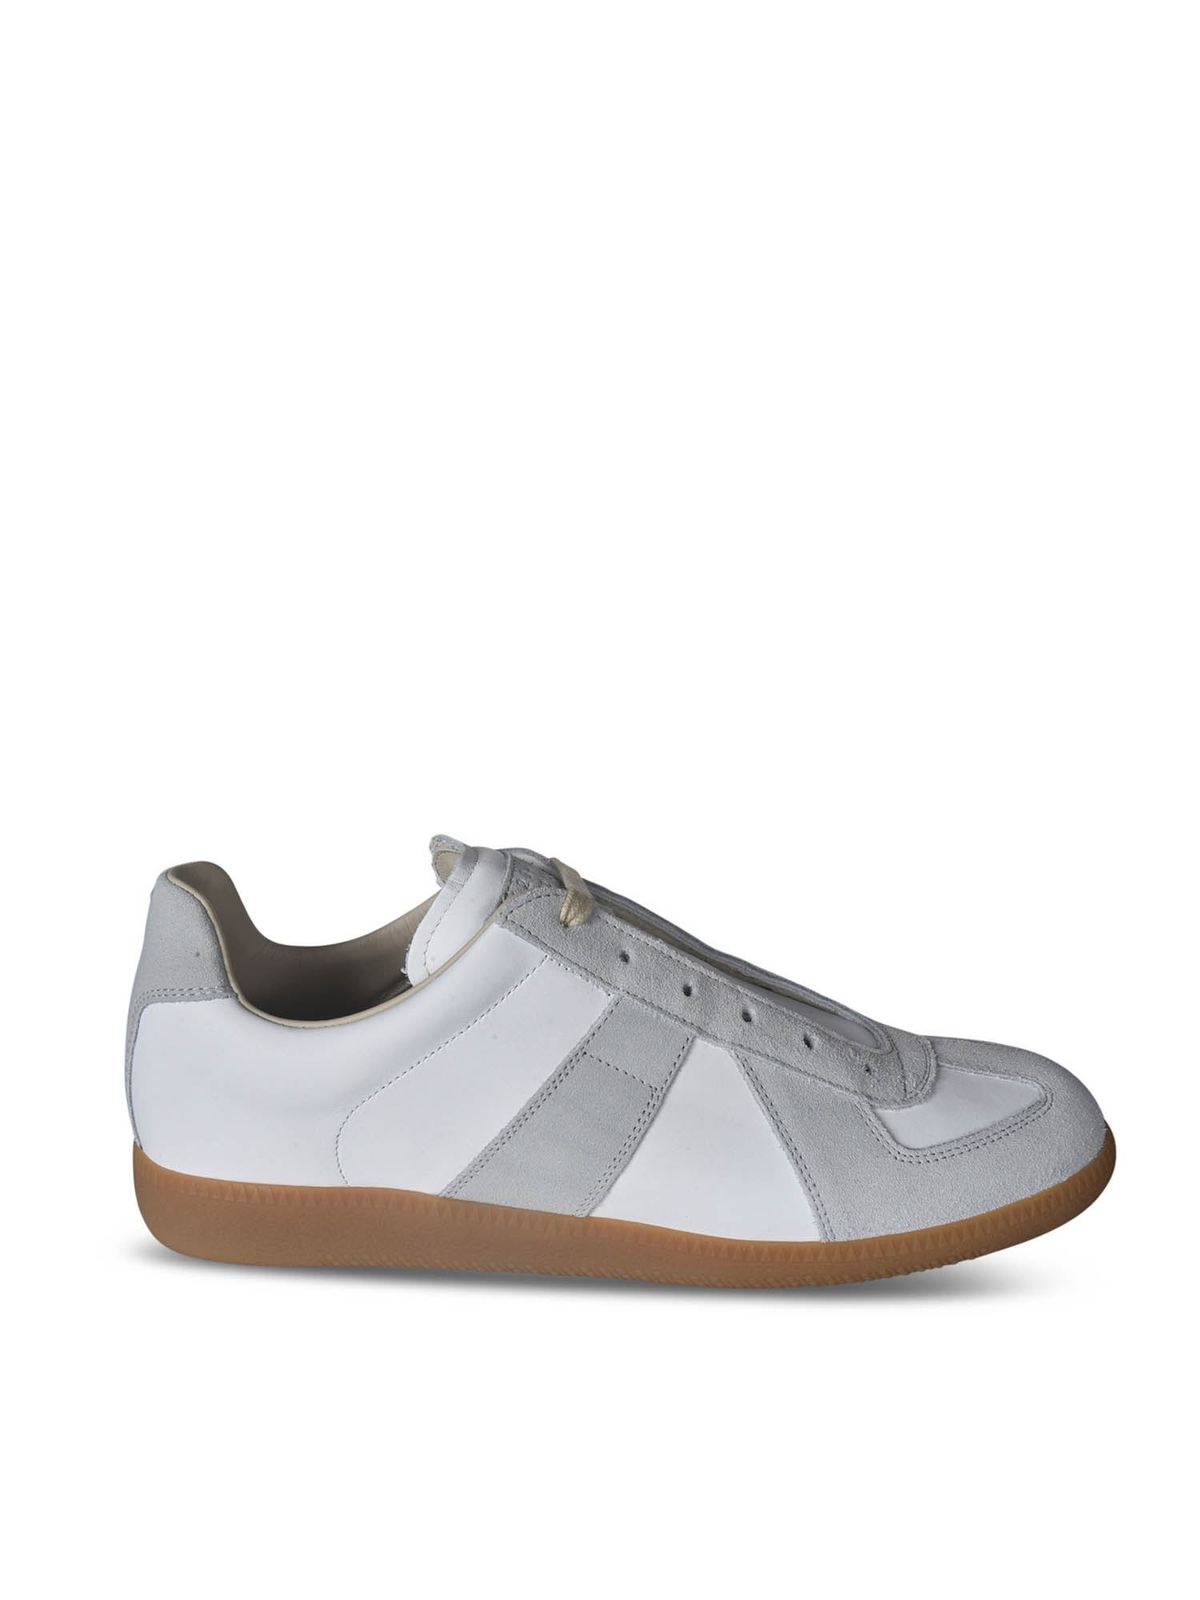 Maison Margiela - Replica sneakers in white - trainers - S57WS0236P1895101